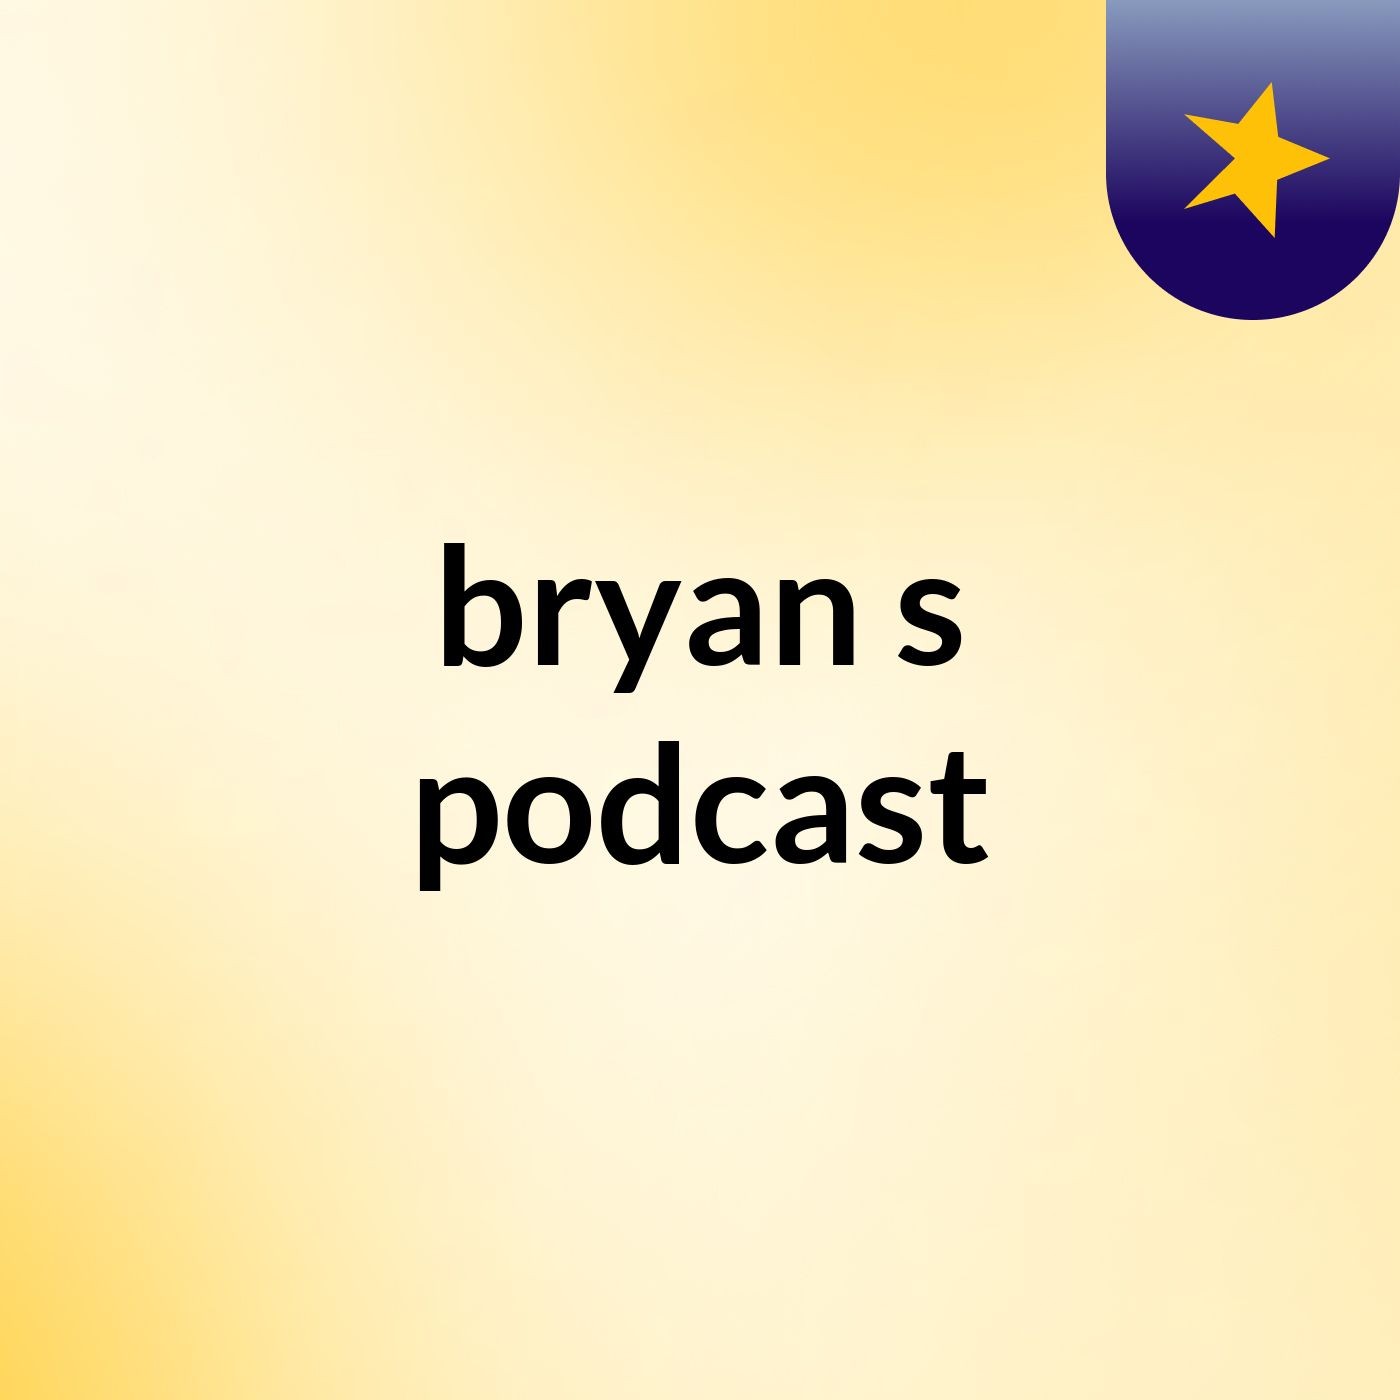 bryan's podcast